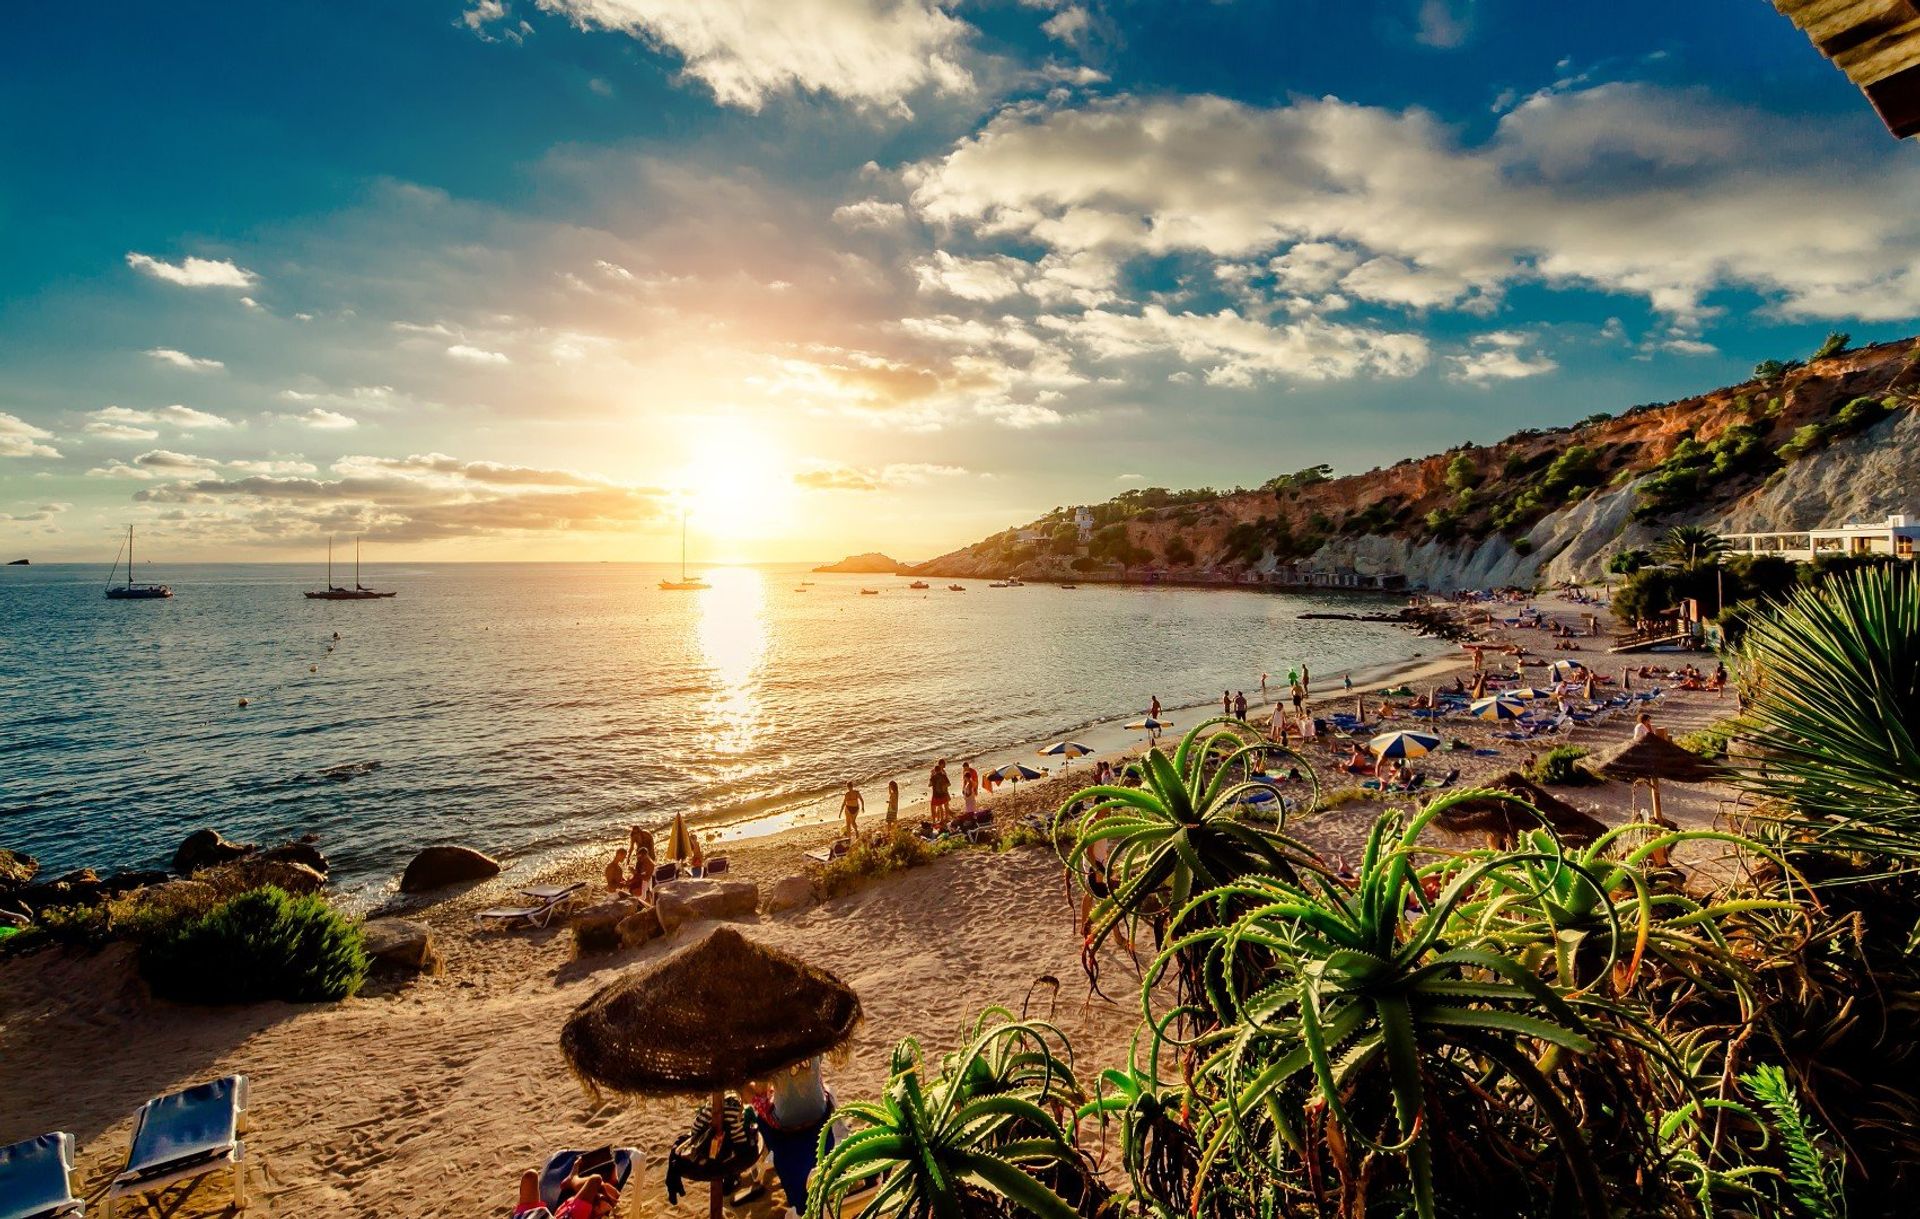 Revel in the beautiful sunset on the Blue Flag Cala d'Hort beach in Ibiza, Balearic Islands